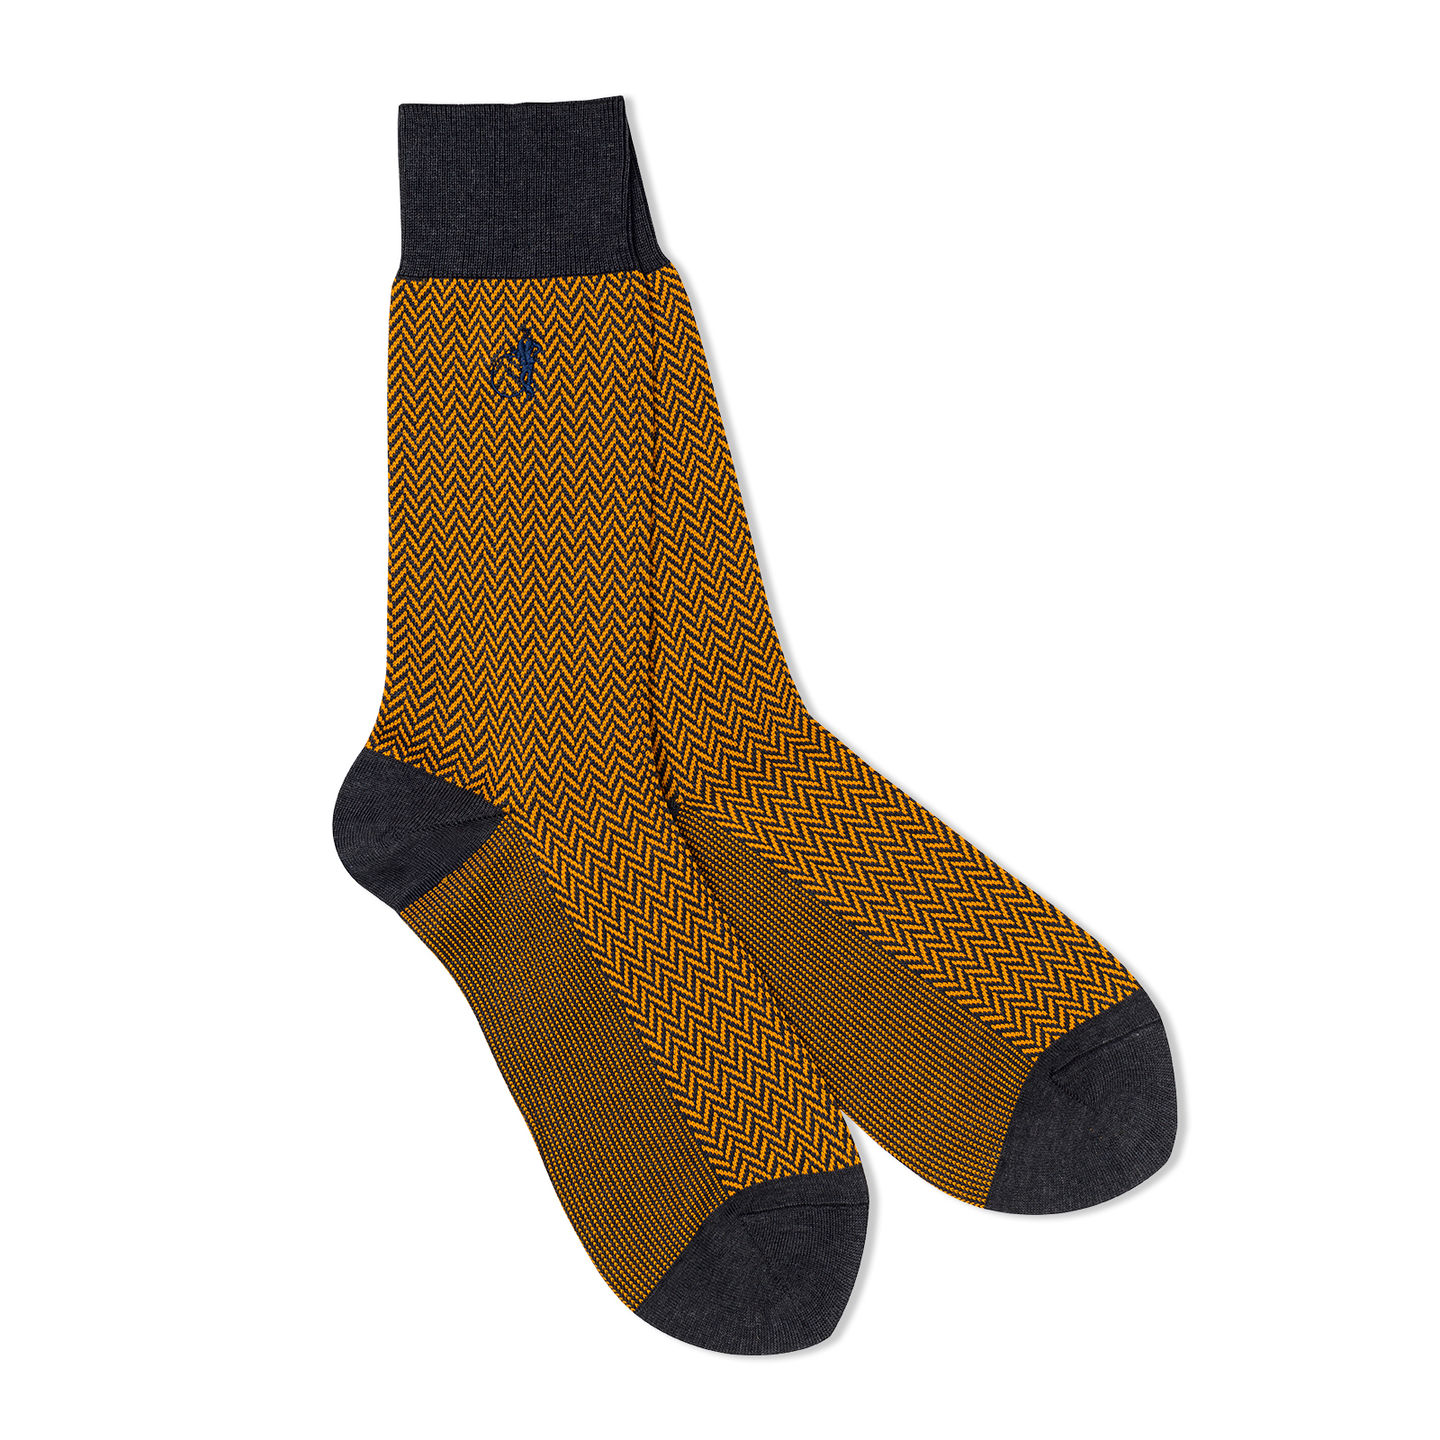 Pair of Herringbone socks in the distinct zig zag pattern on black and yellow